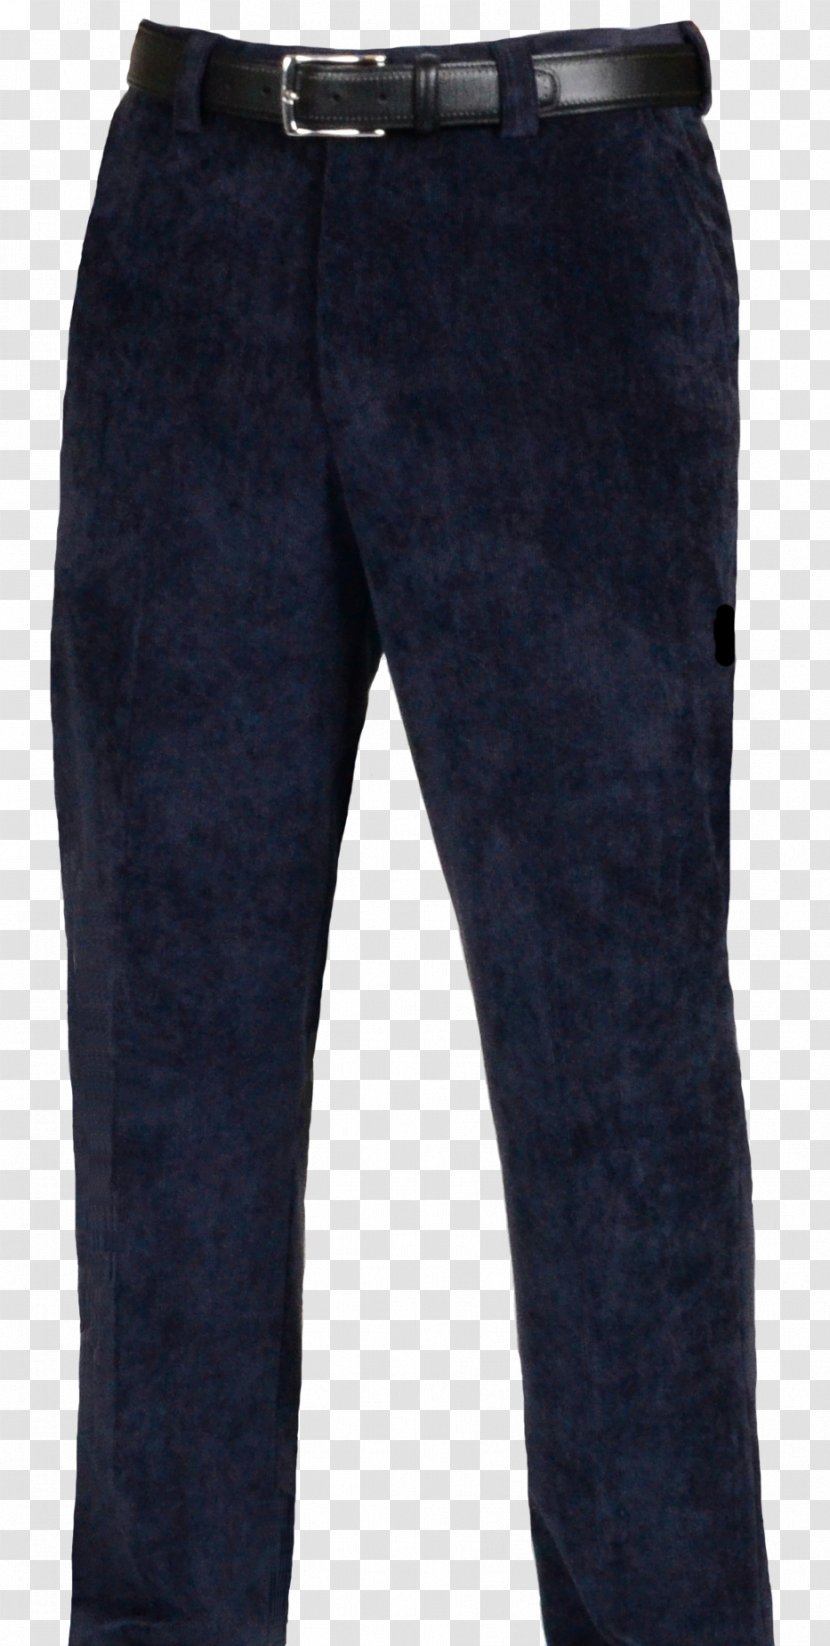 T-shirt Pants Jeans Clothing Black - Men's Flat Material Transparent PNG